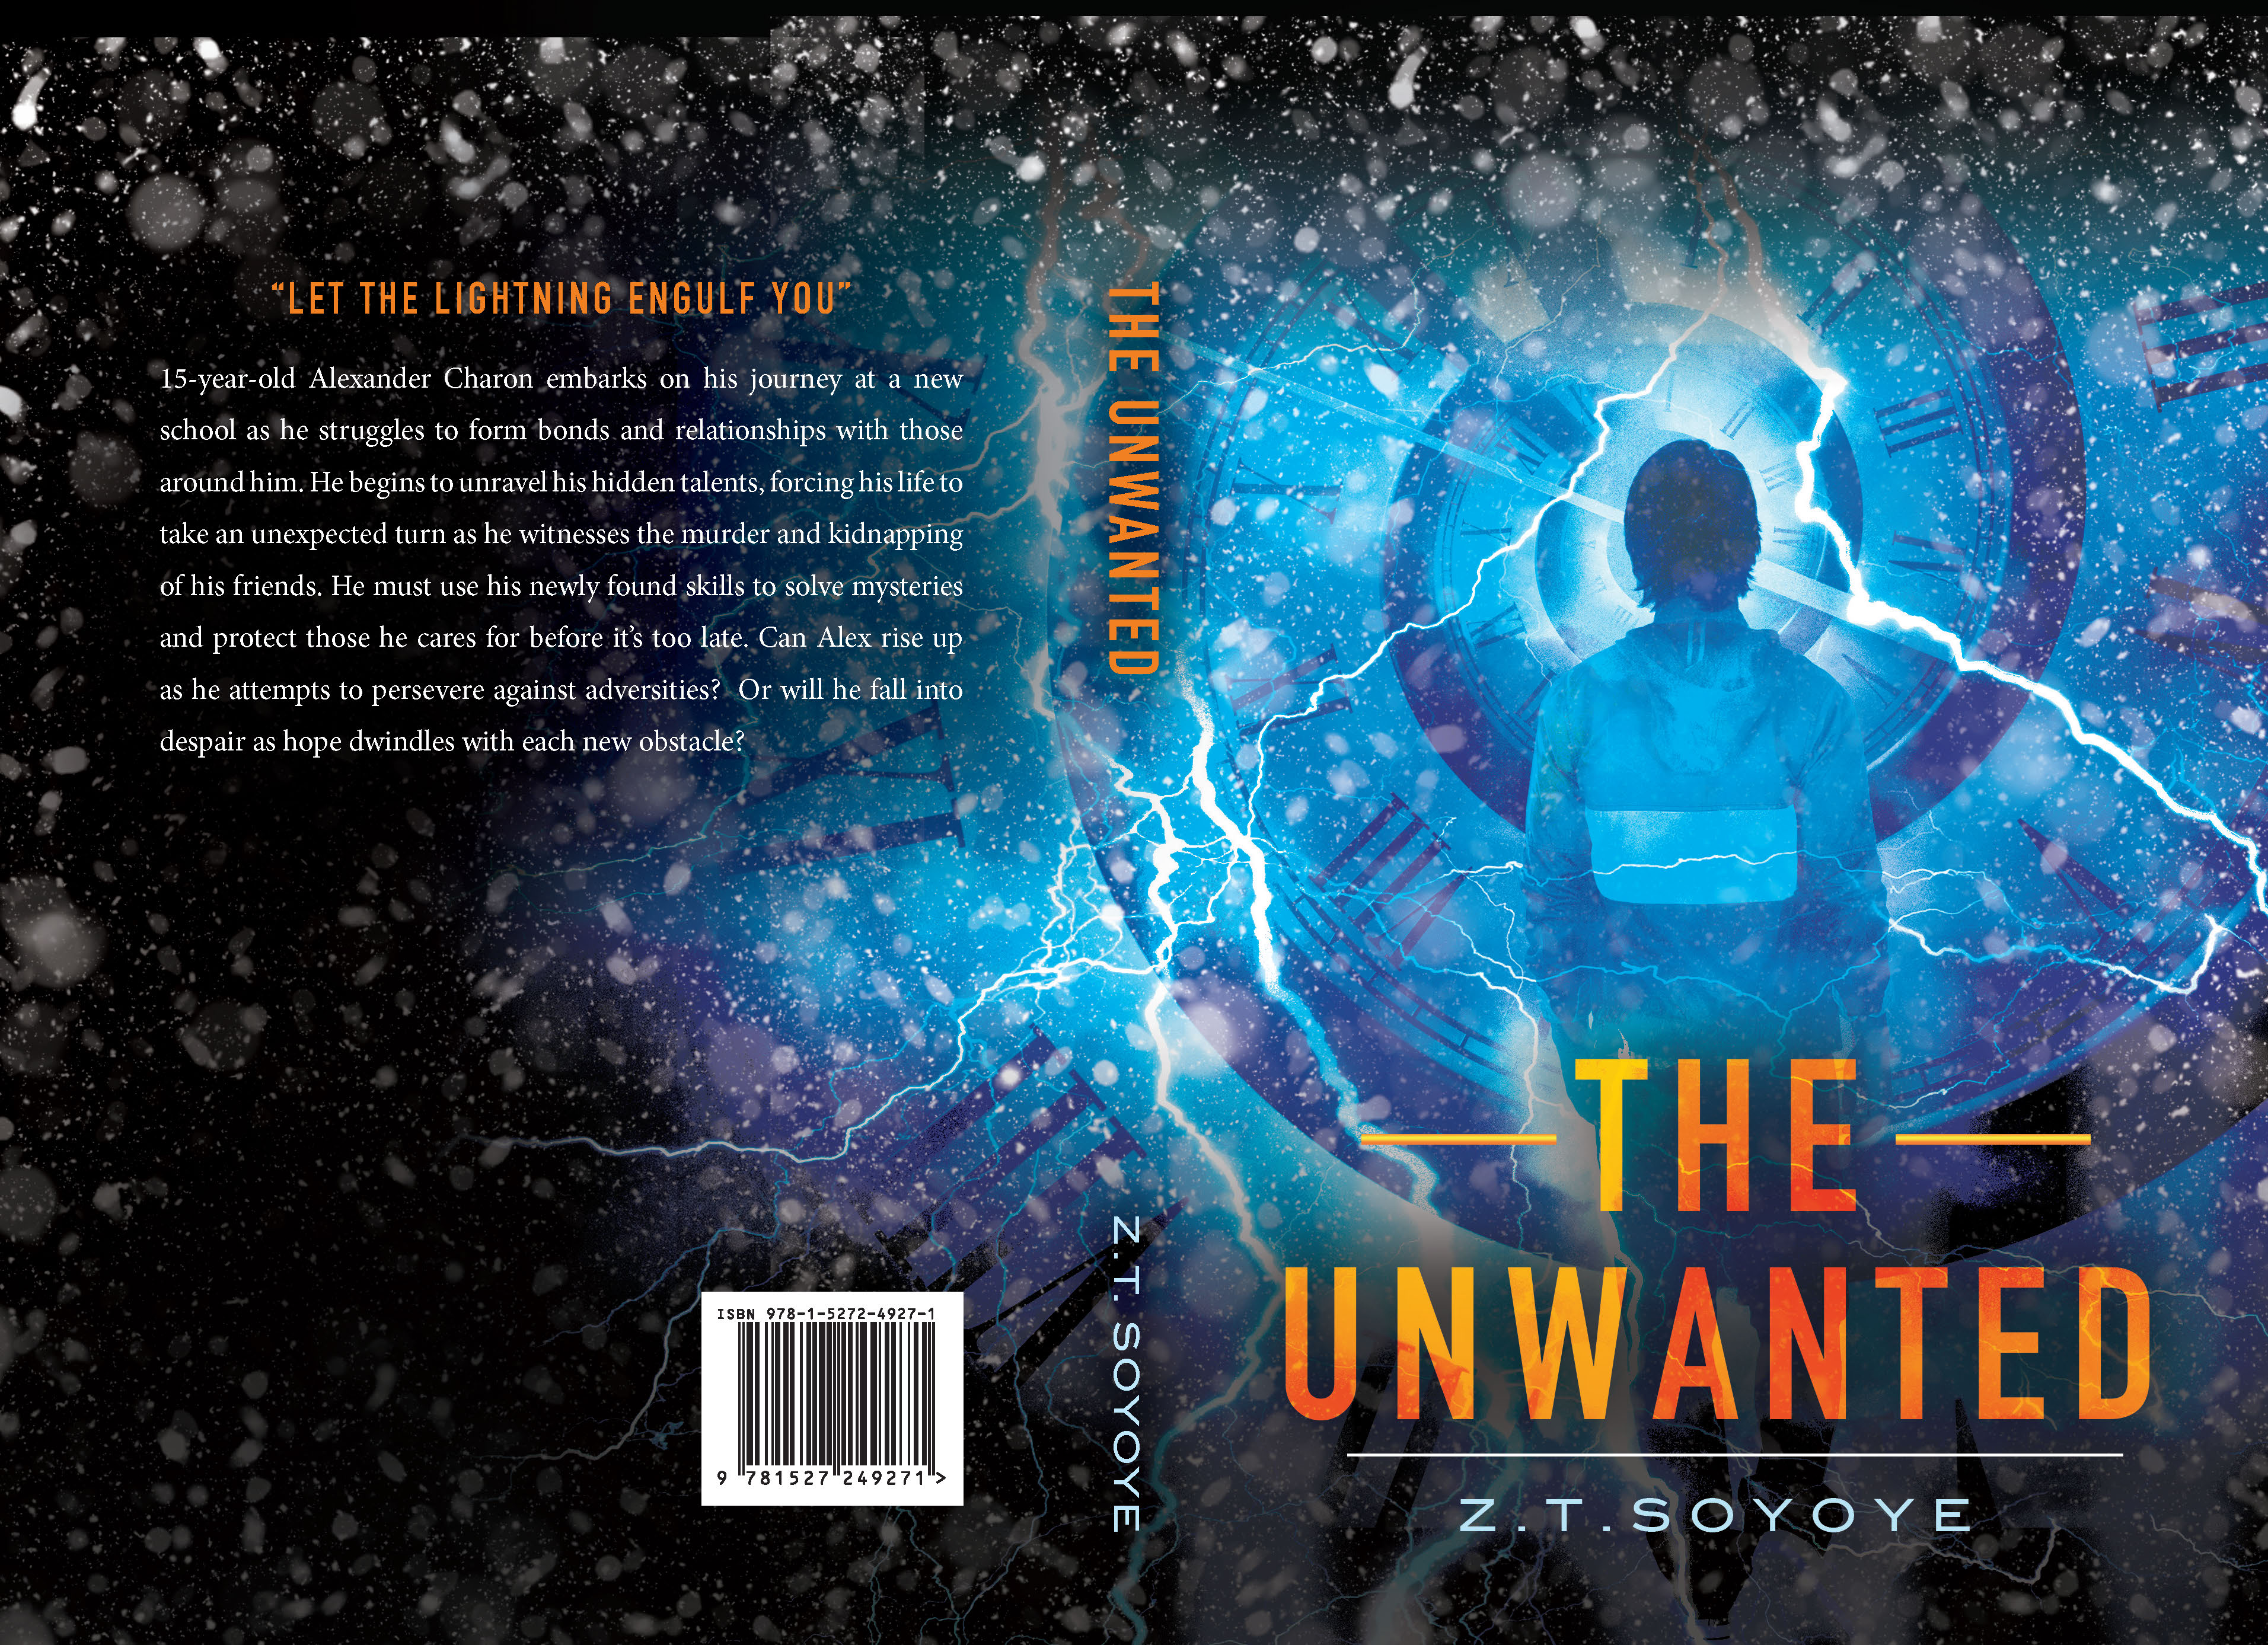 YA fantasy mystery novel, The Unwanted by Z.T.Soyoye